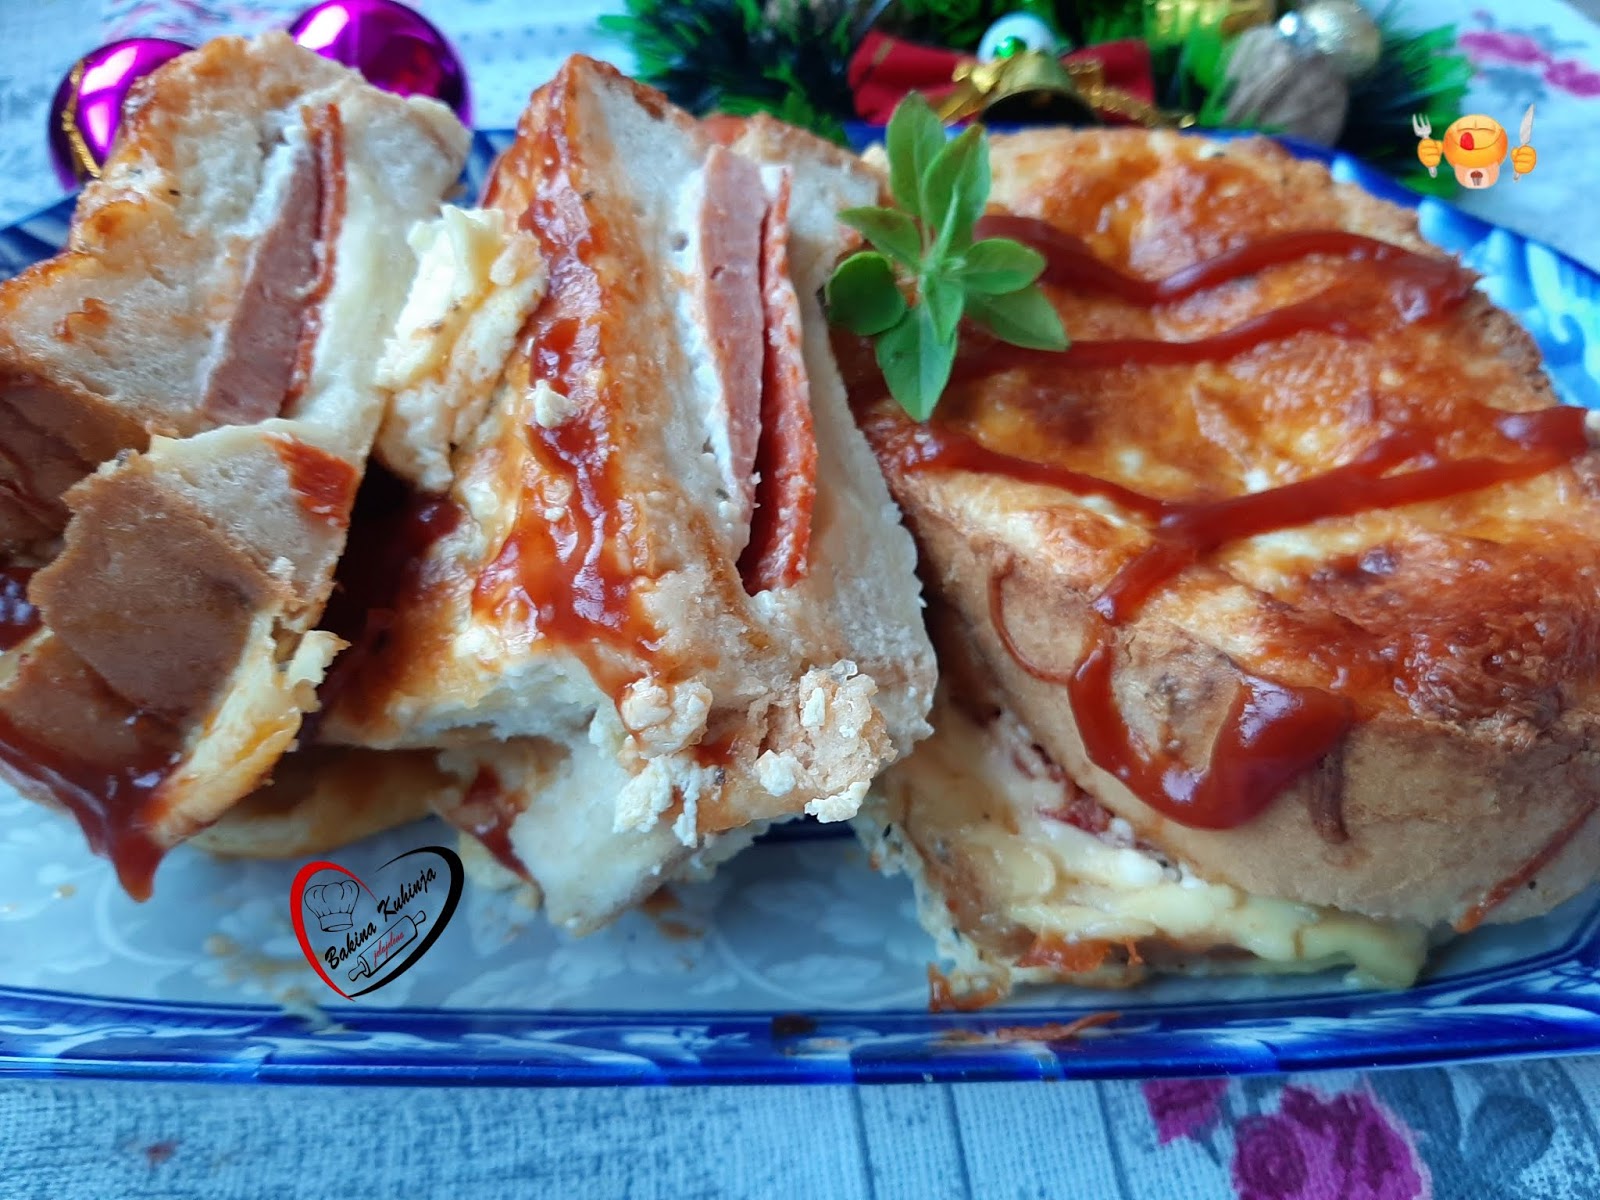 Brzi sendvii, foto: bakina kuhinja